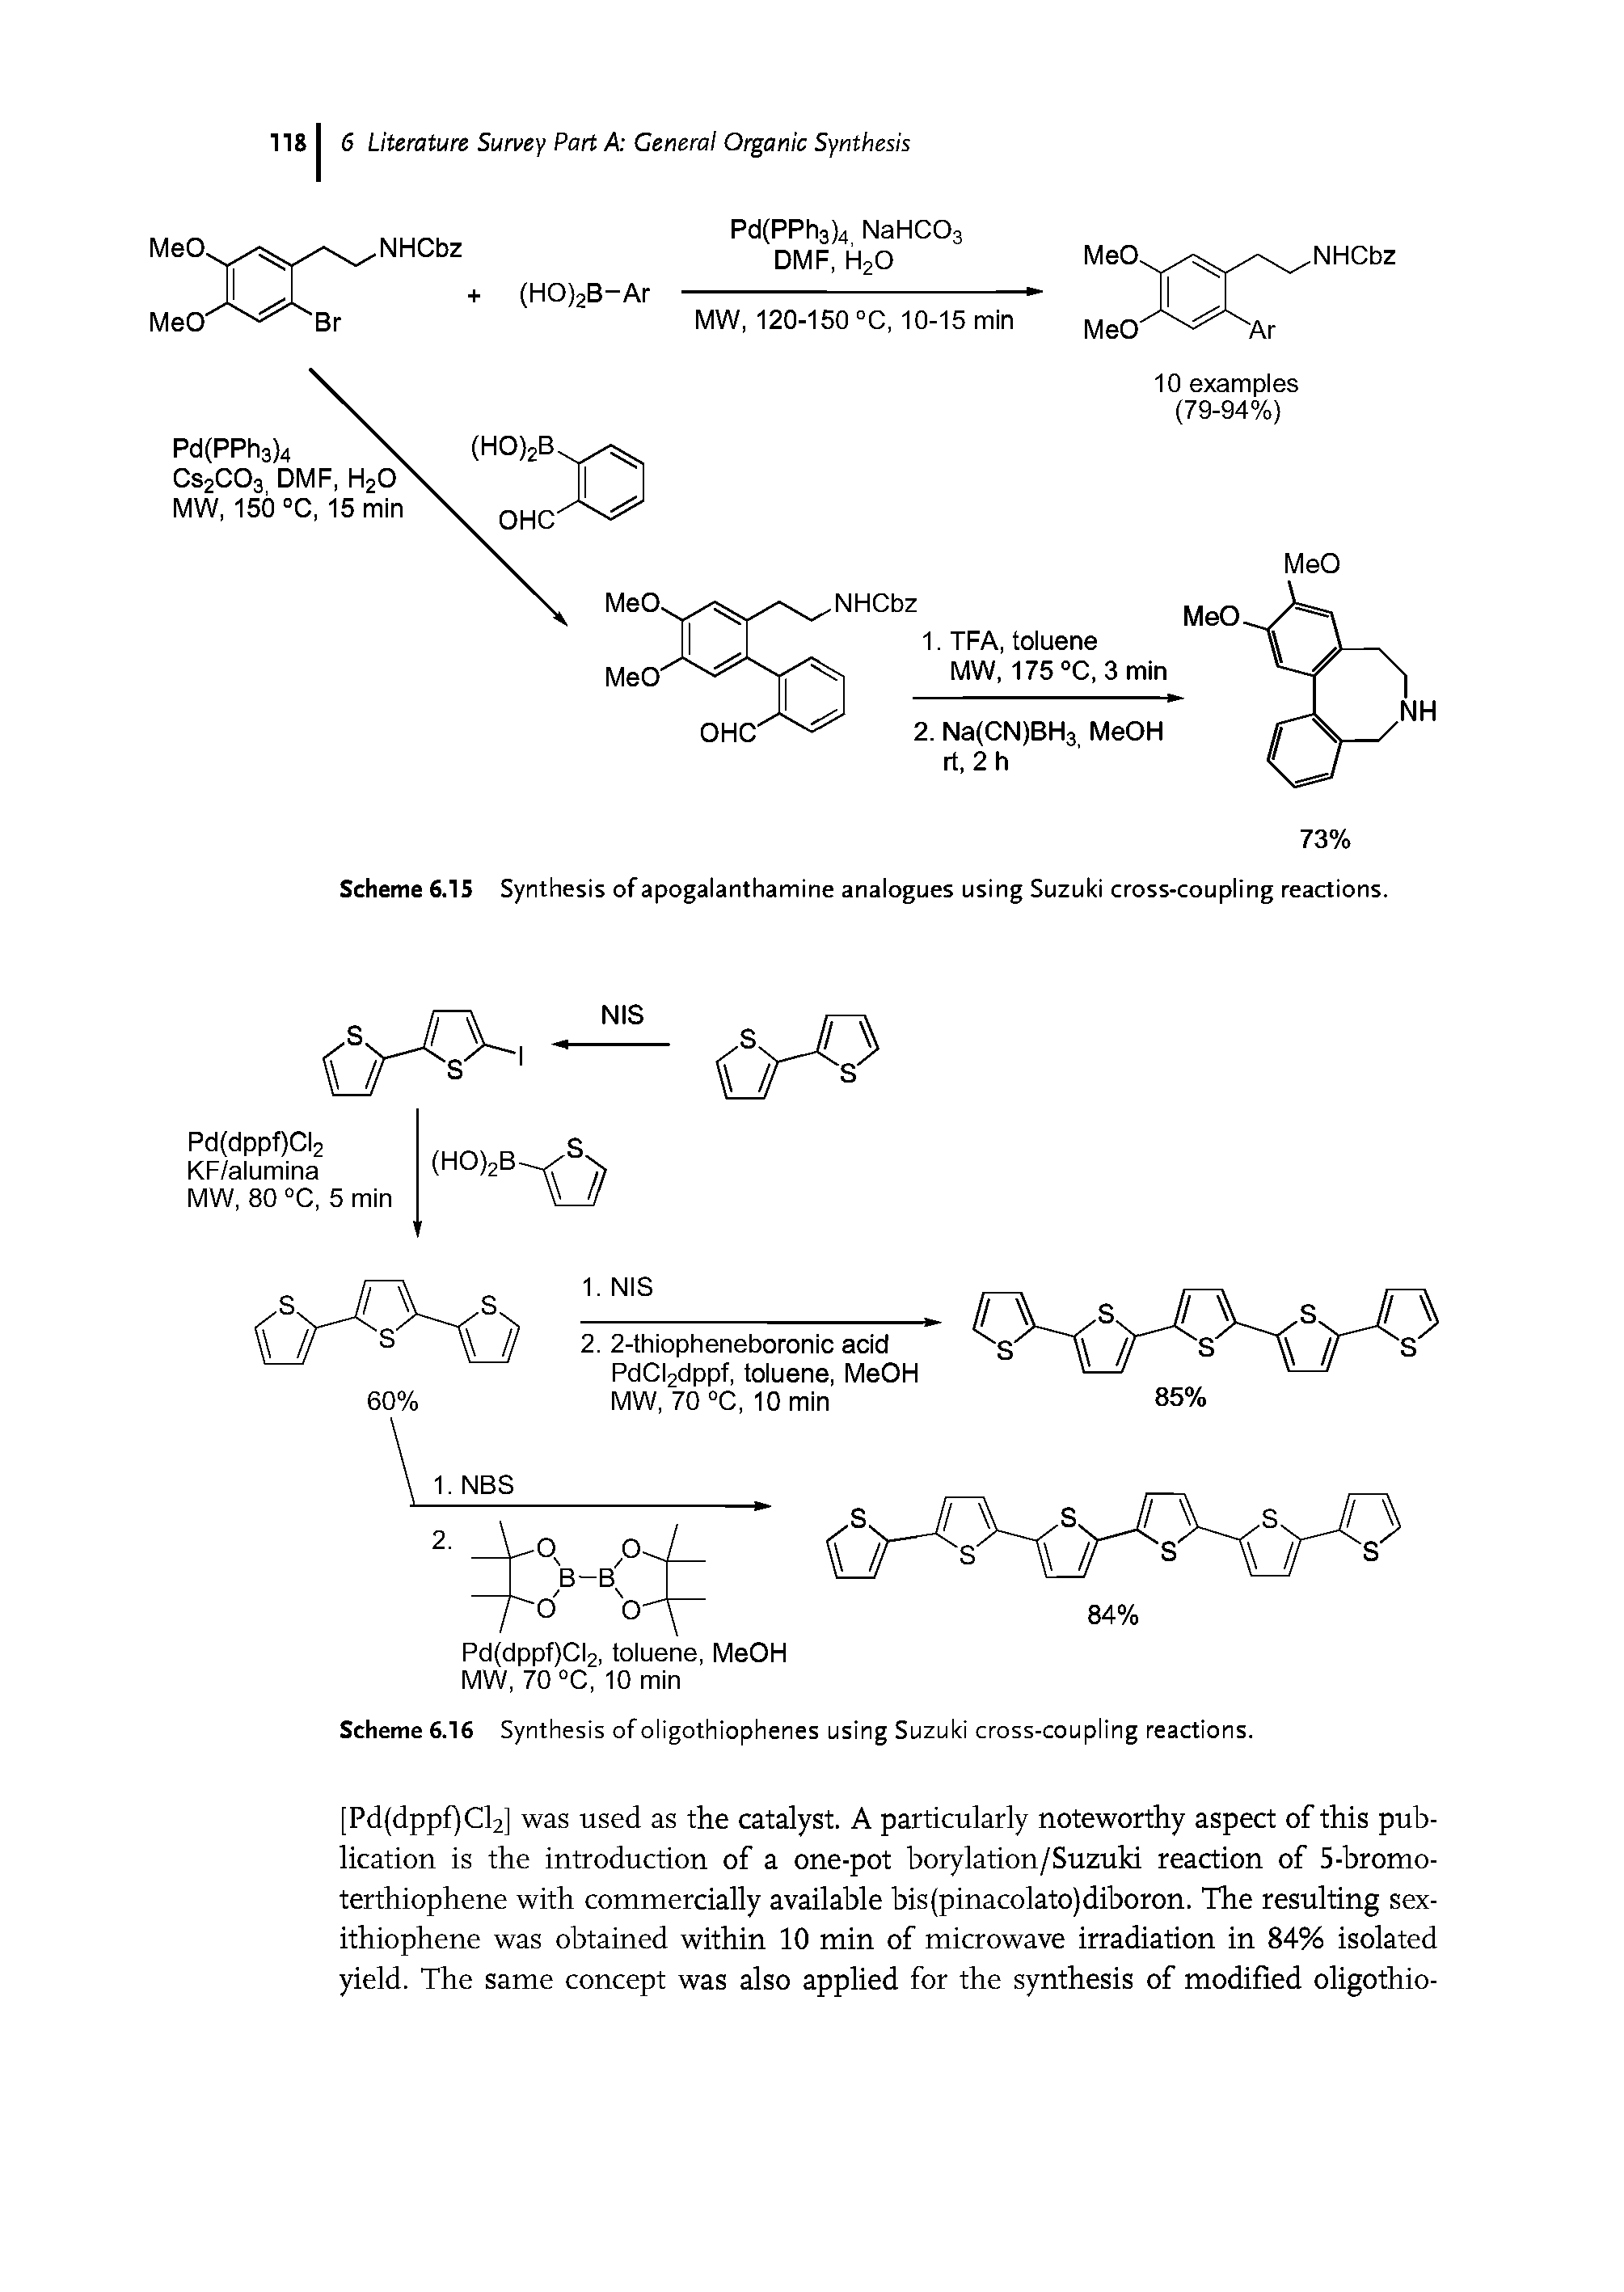 Scheme 6.16 Synthesis of oligothiophenes using Suzuki cross-coupling reactions.